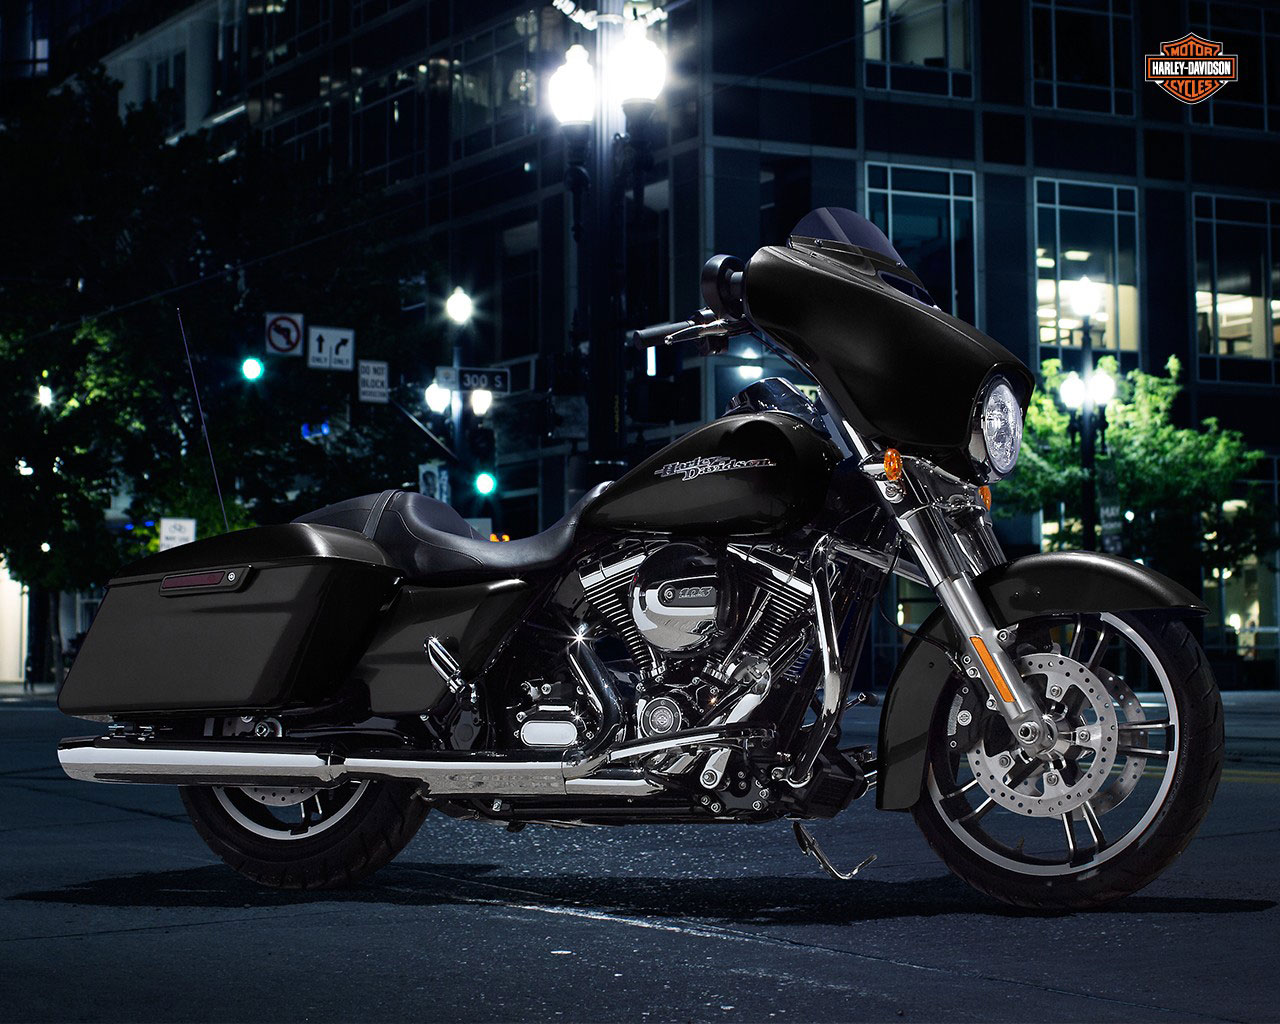 2015 Harley Davidson FLHX Street Glide Review